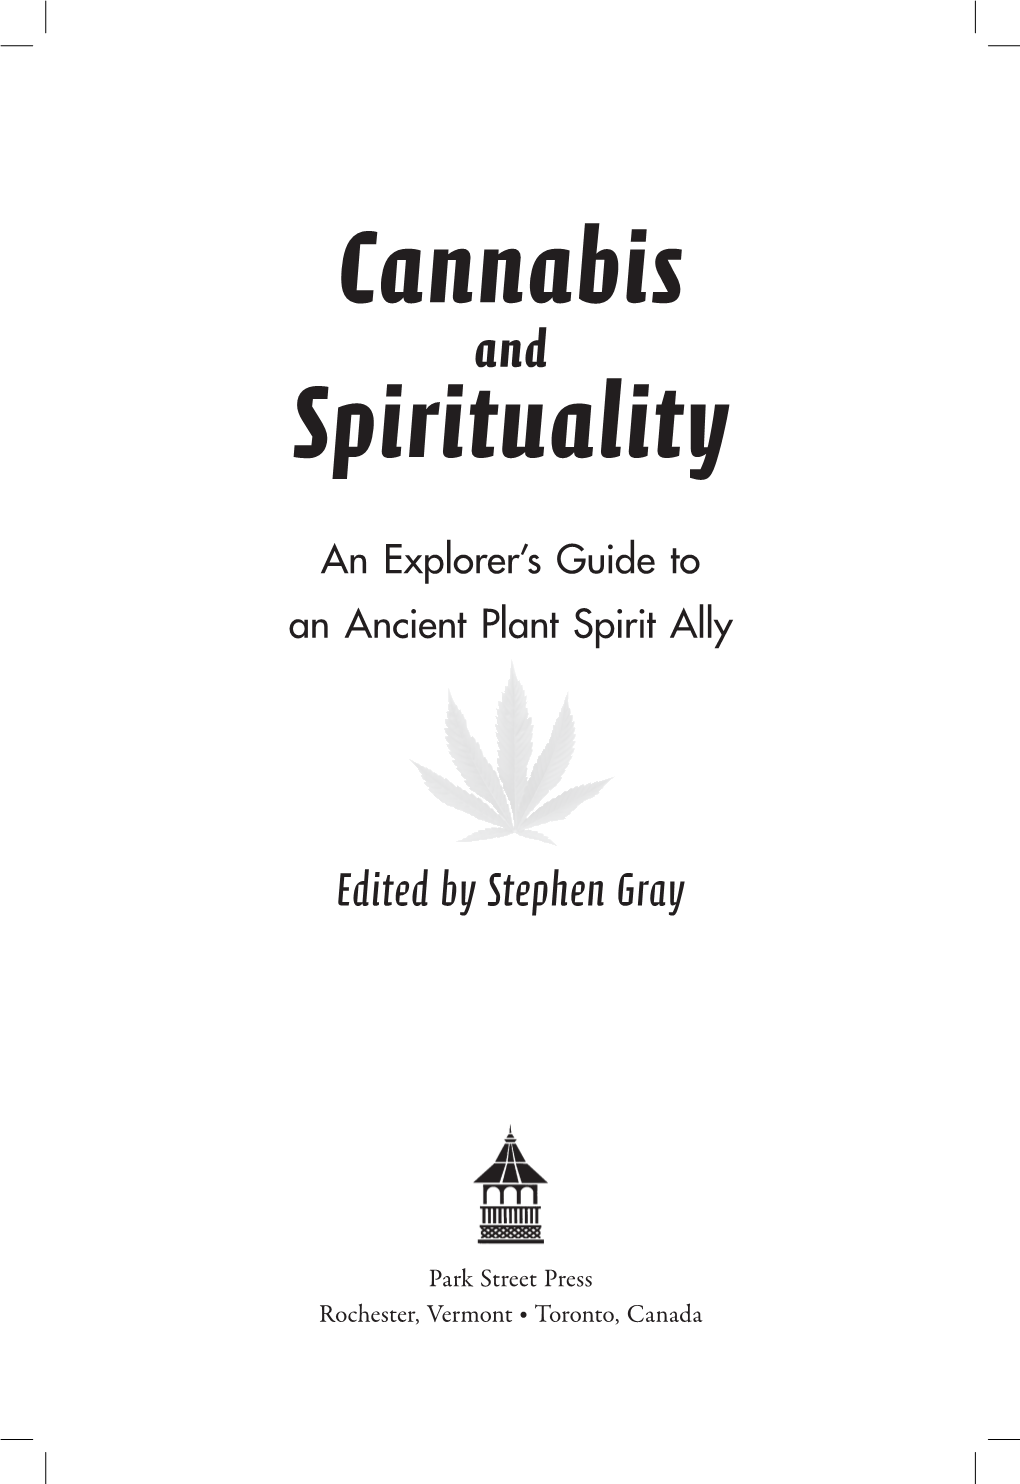 Cannabis Spirituality in Practice(S) ◆ Stephen Gray 89